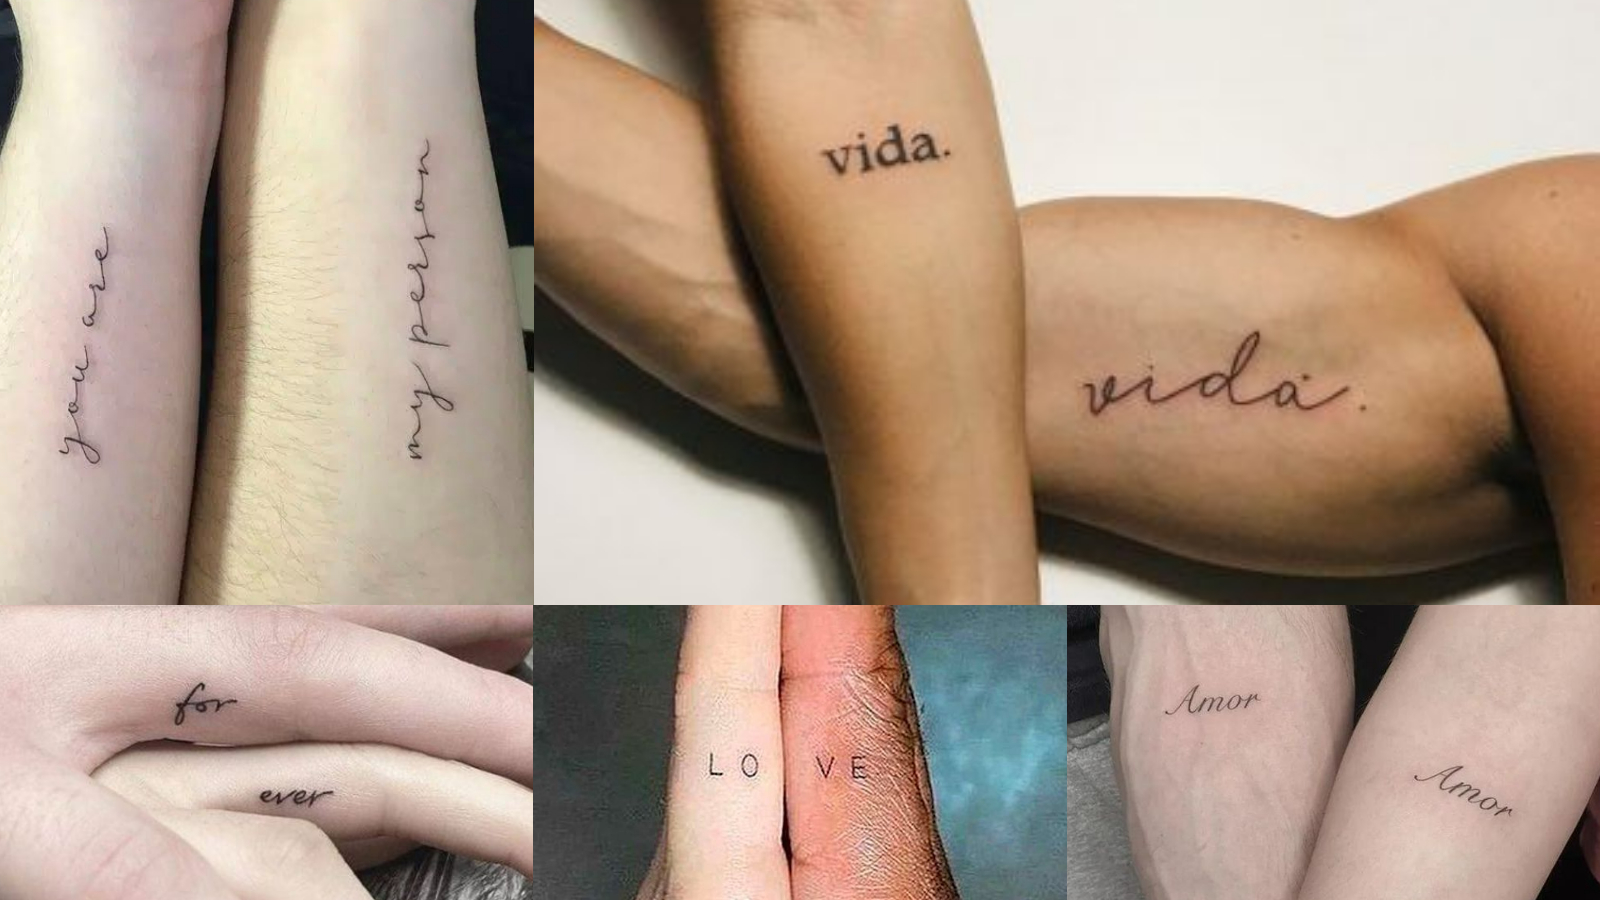 Frases para tatuarse en pareja 1